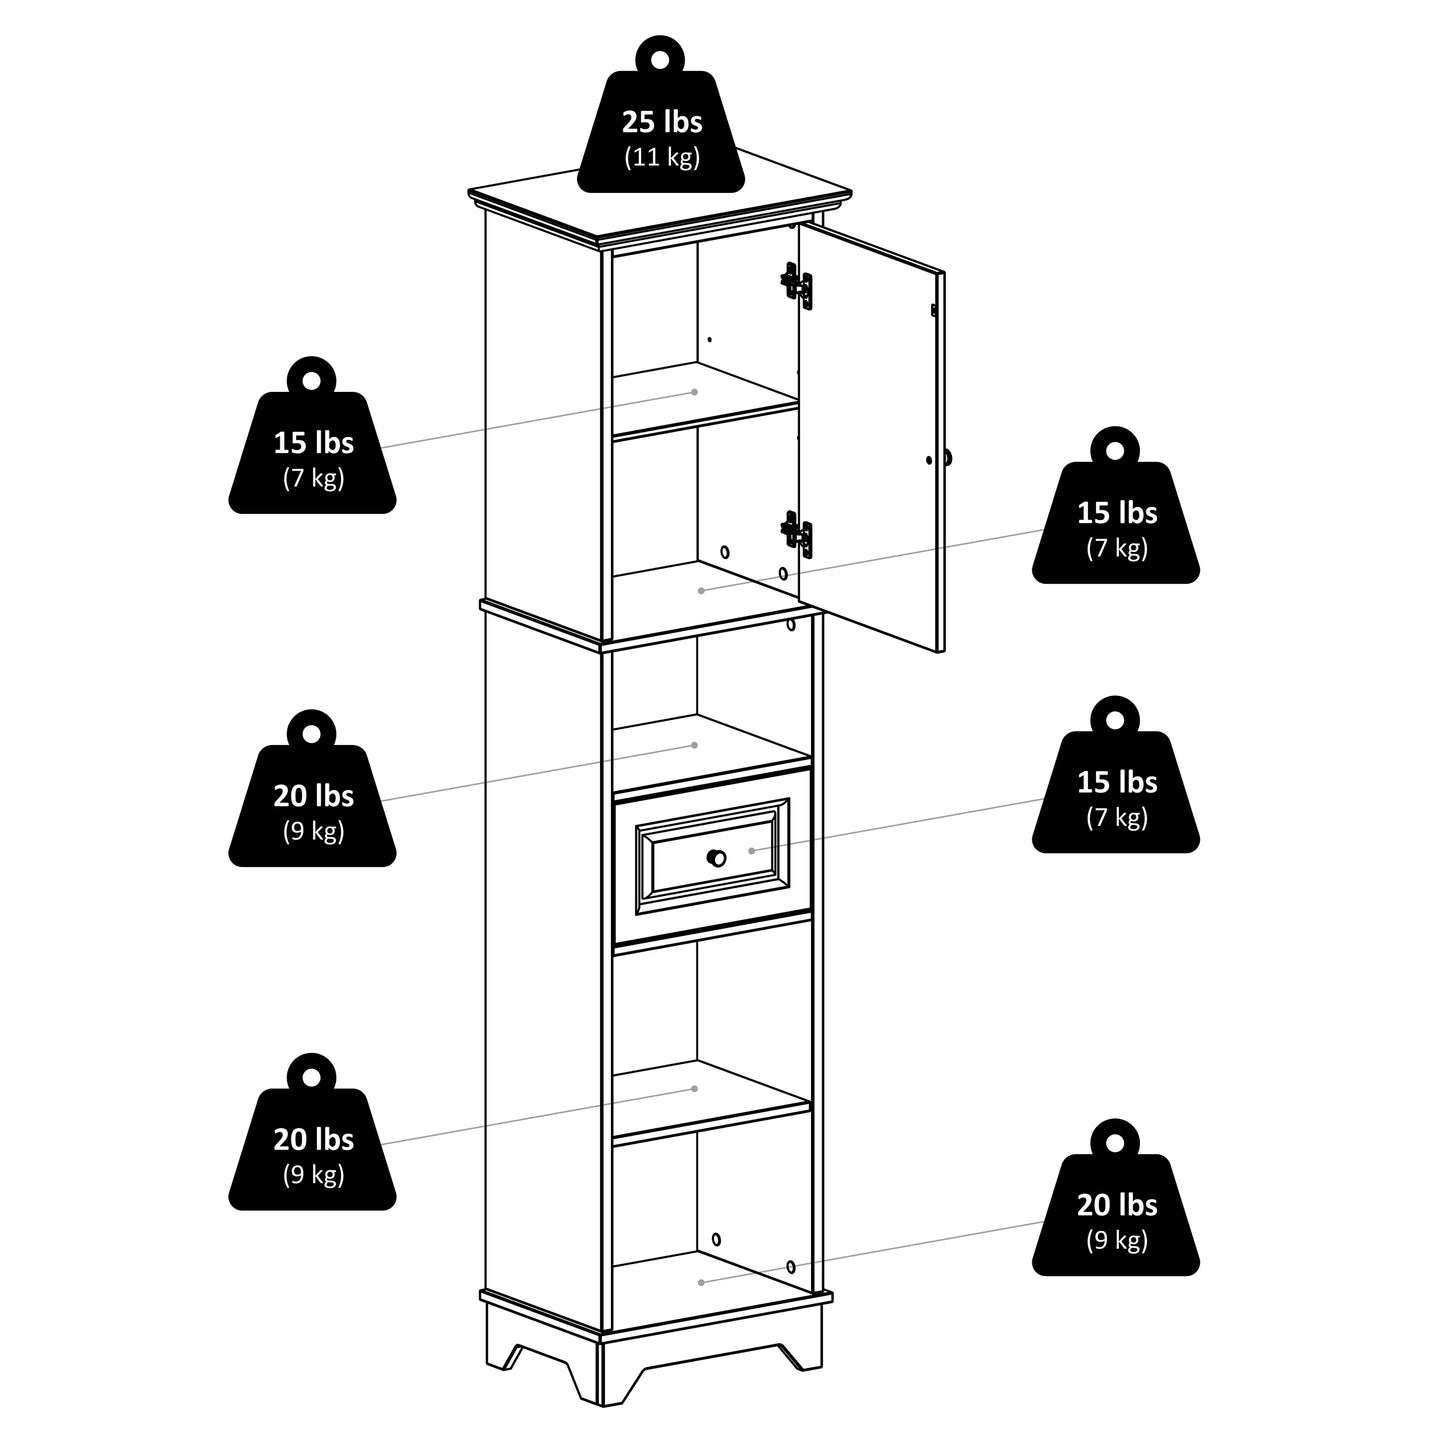 Wyatt 3-Pc Storage Cabinet with 2 Foldable Corn Husk Baskets, Black and Chocolate